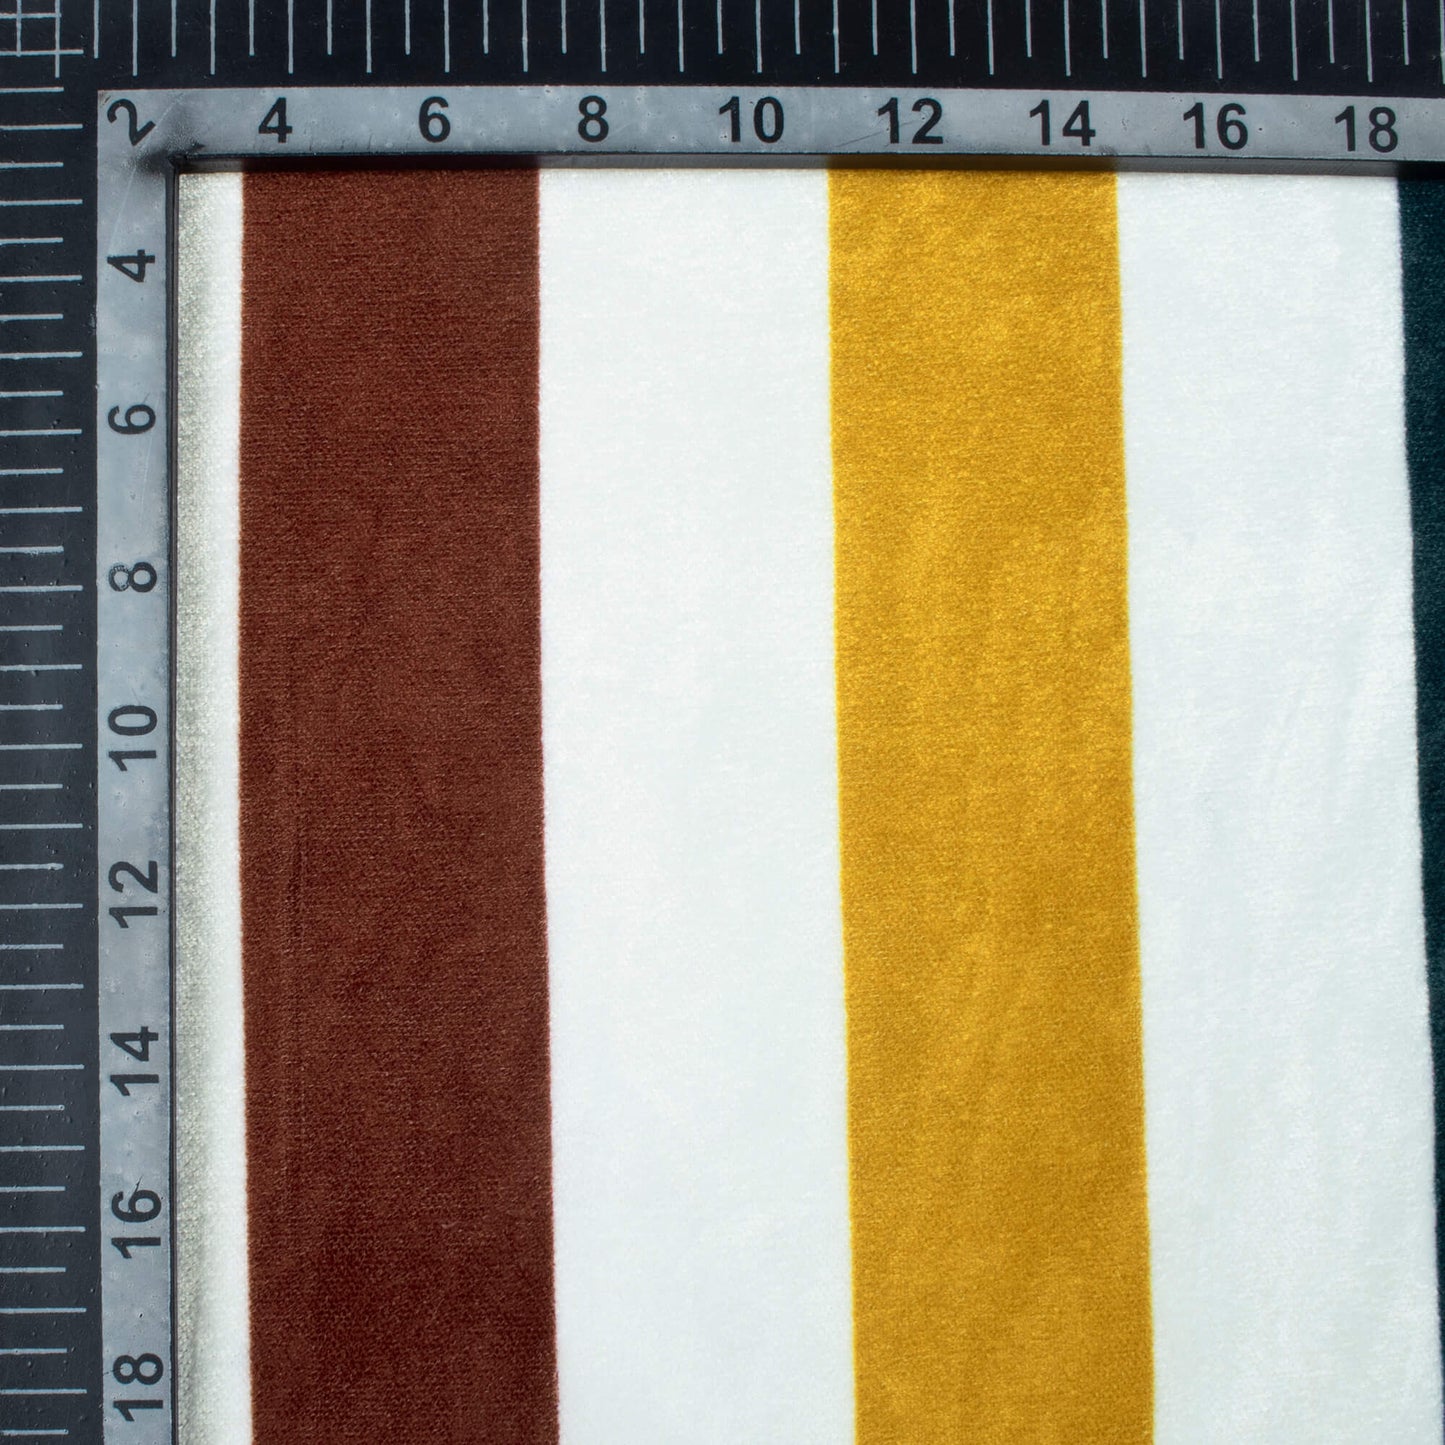 White And Dark Blue Stripes Pattern Digital Print Premium Velvet Fabric